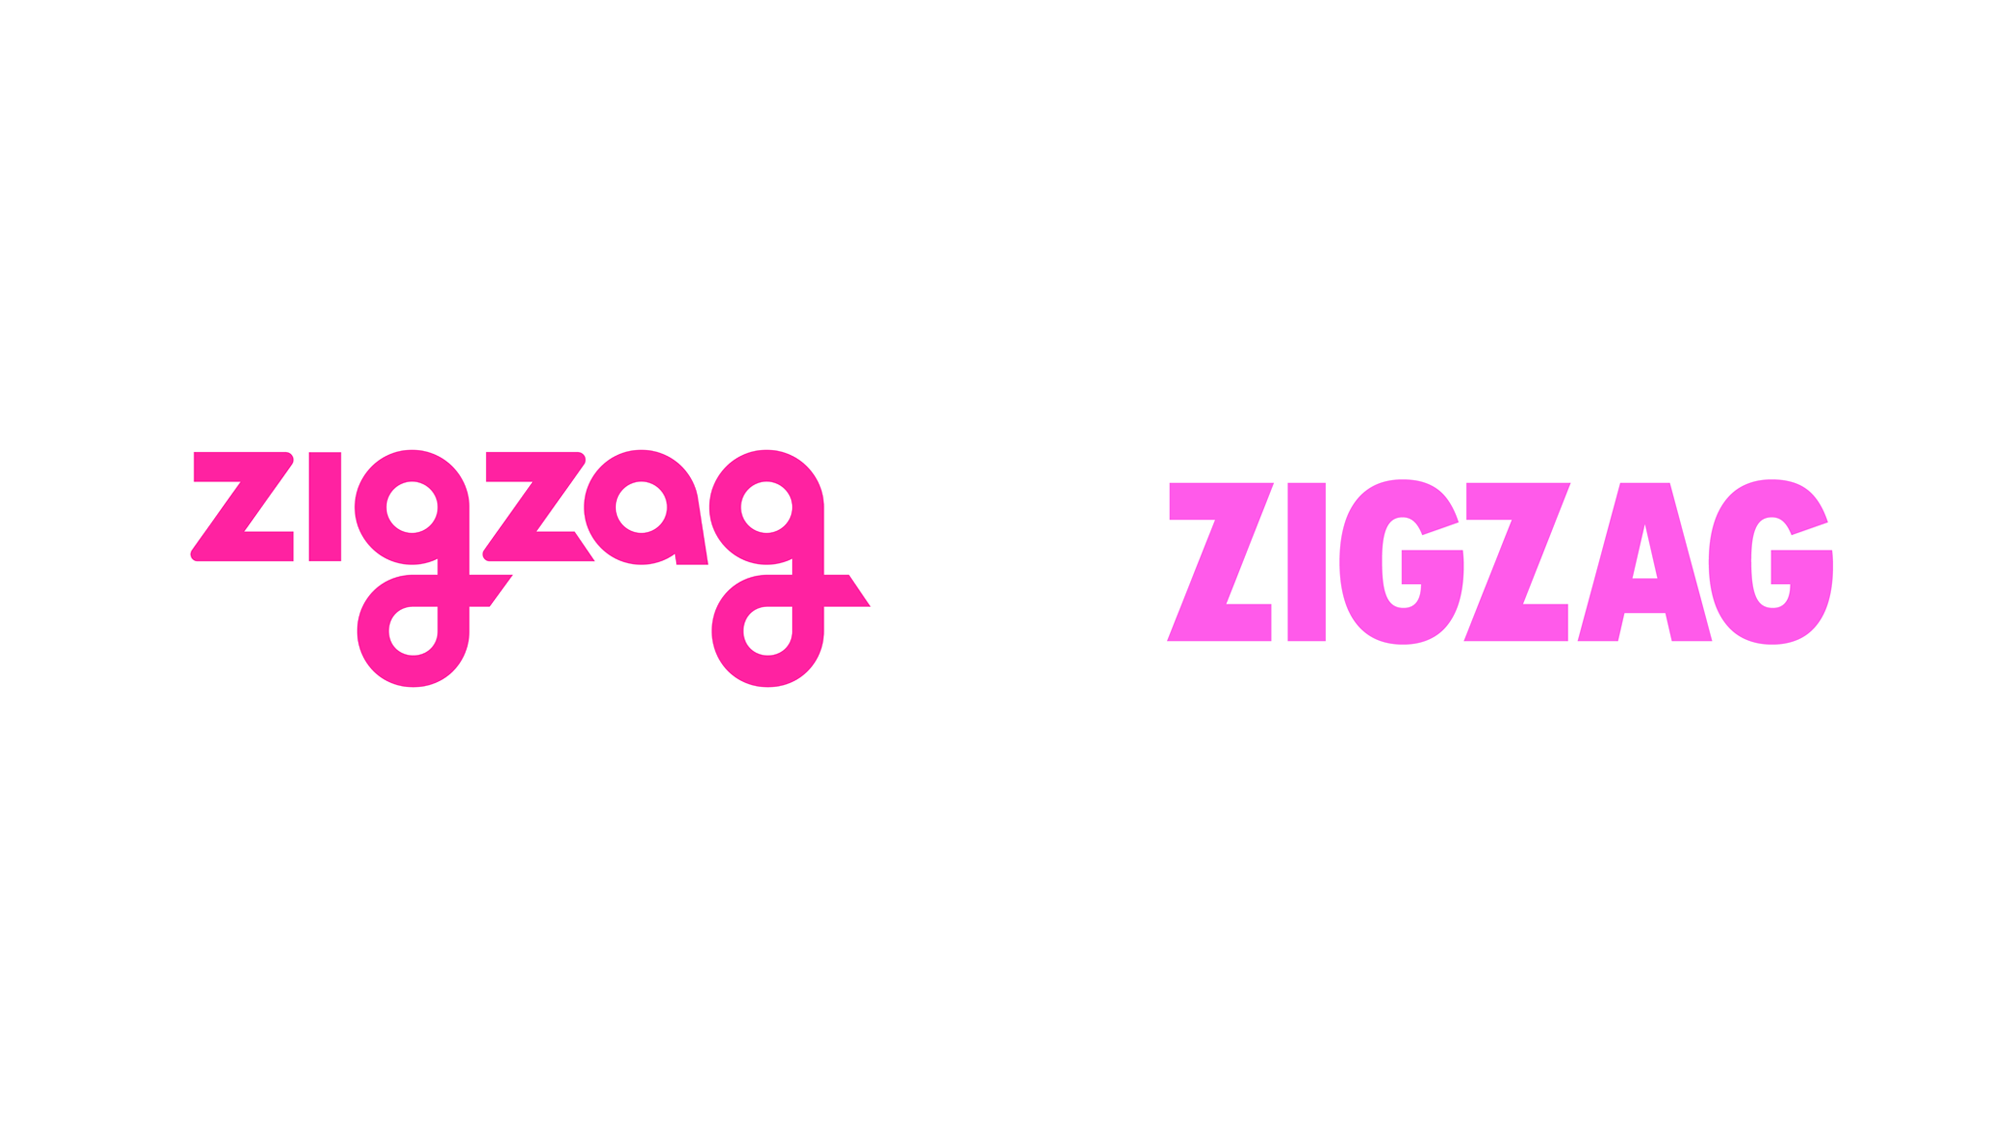 Brand New: New Logo and Identity for Zigzag by Porto Rocha